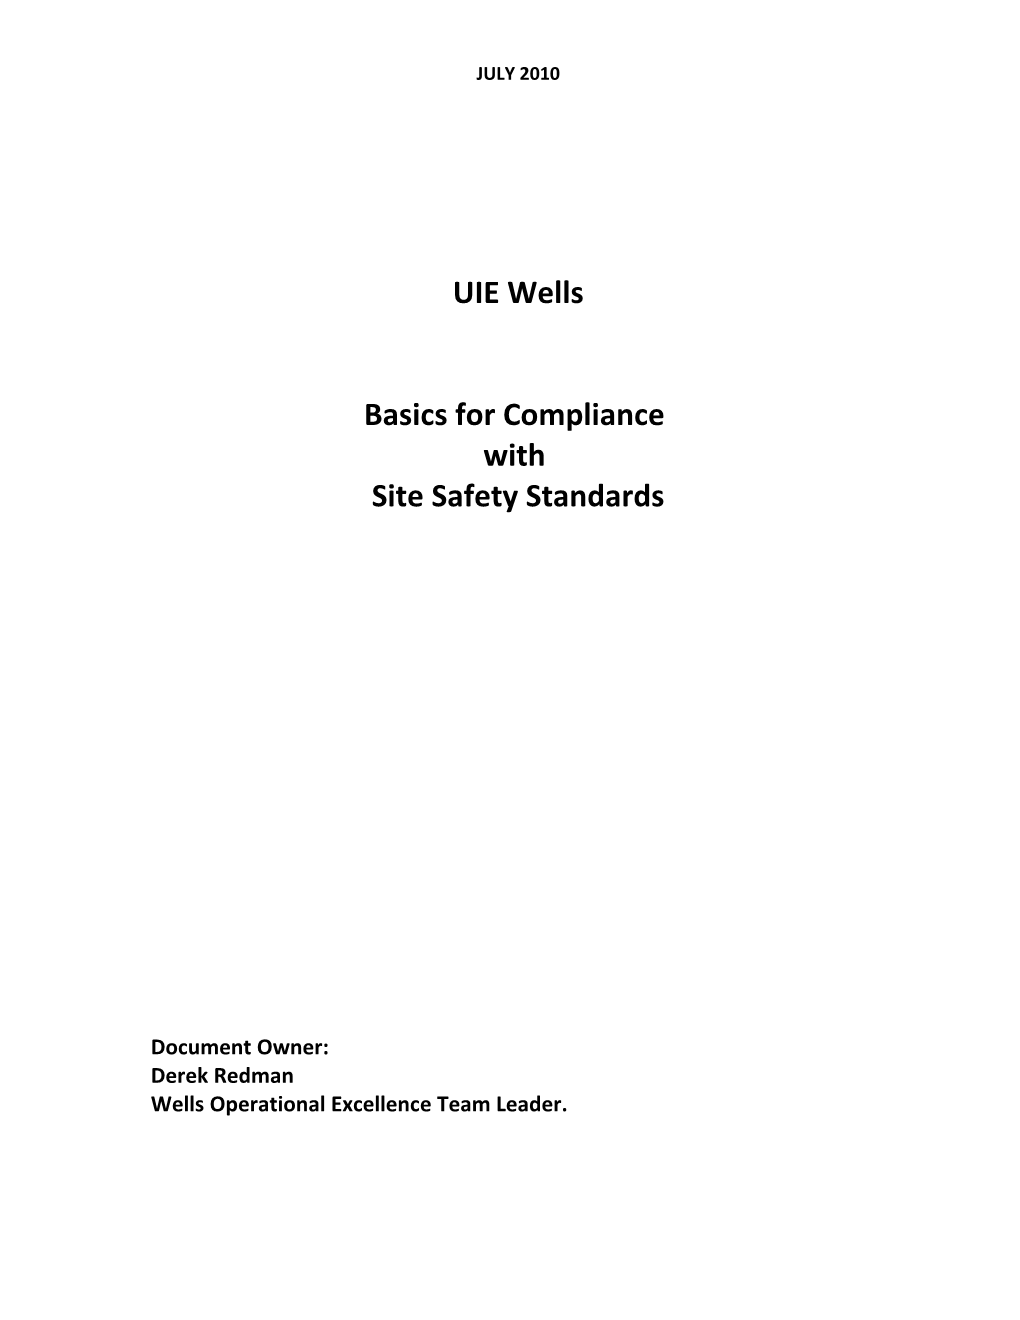 Basics for Compliance